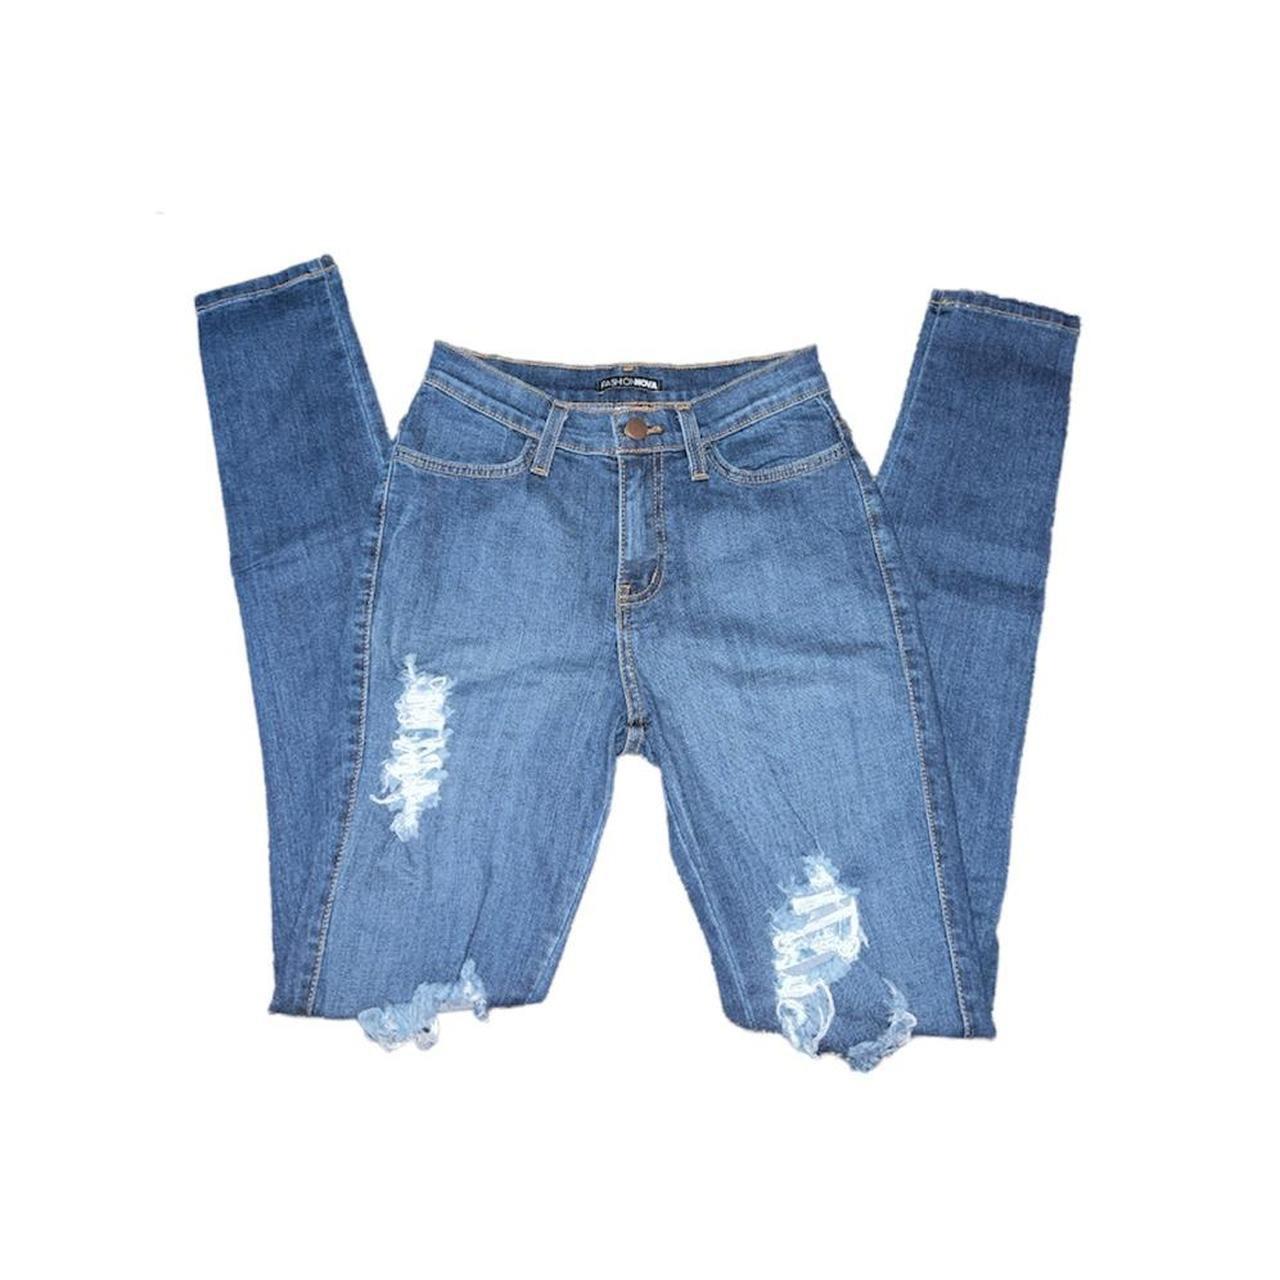 Product Image 1 - FASHIONNOVA Beach Bum Jeans in